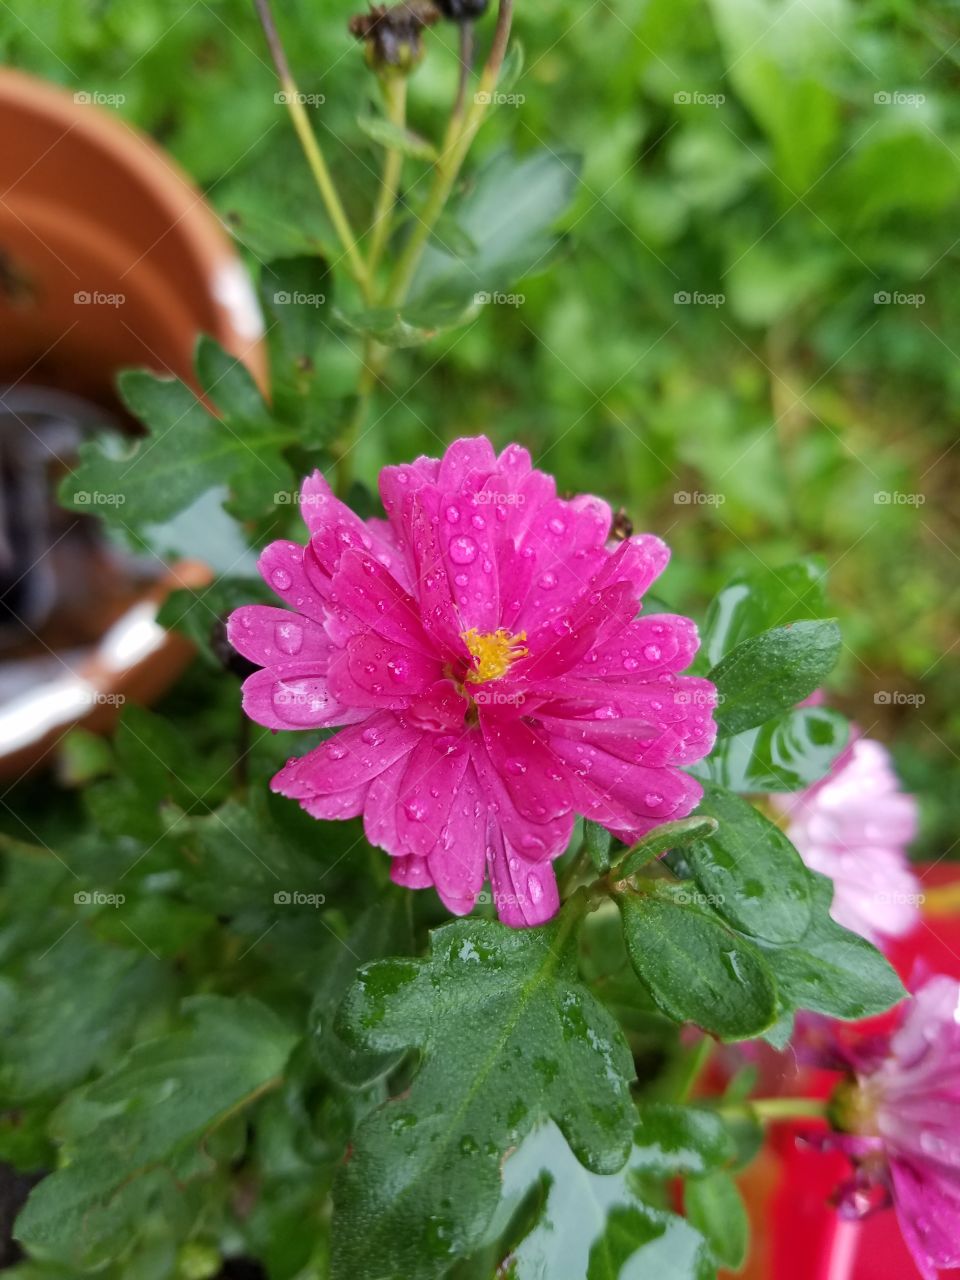 rain on the flower